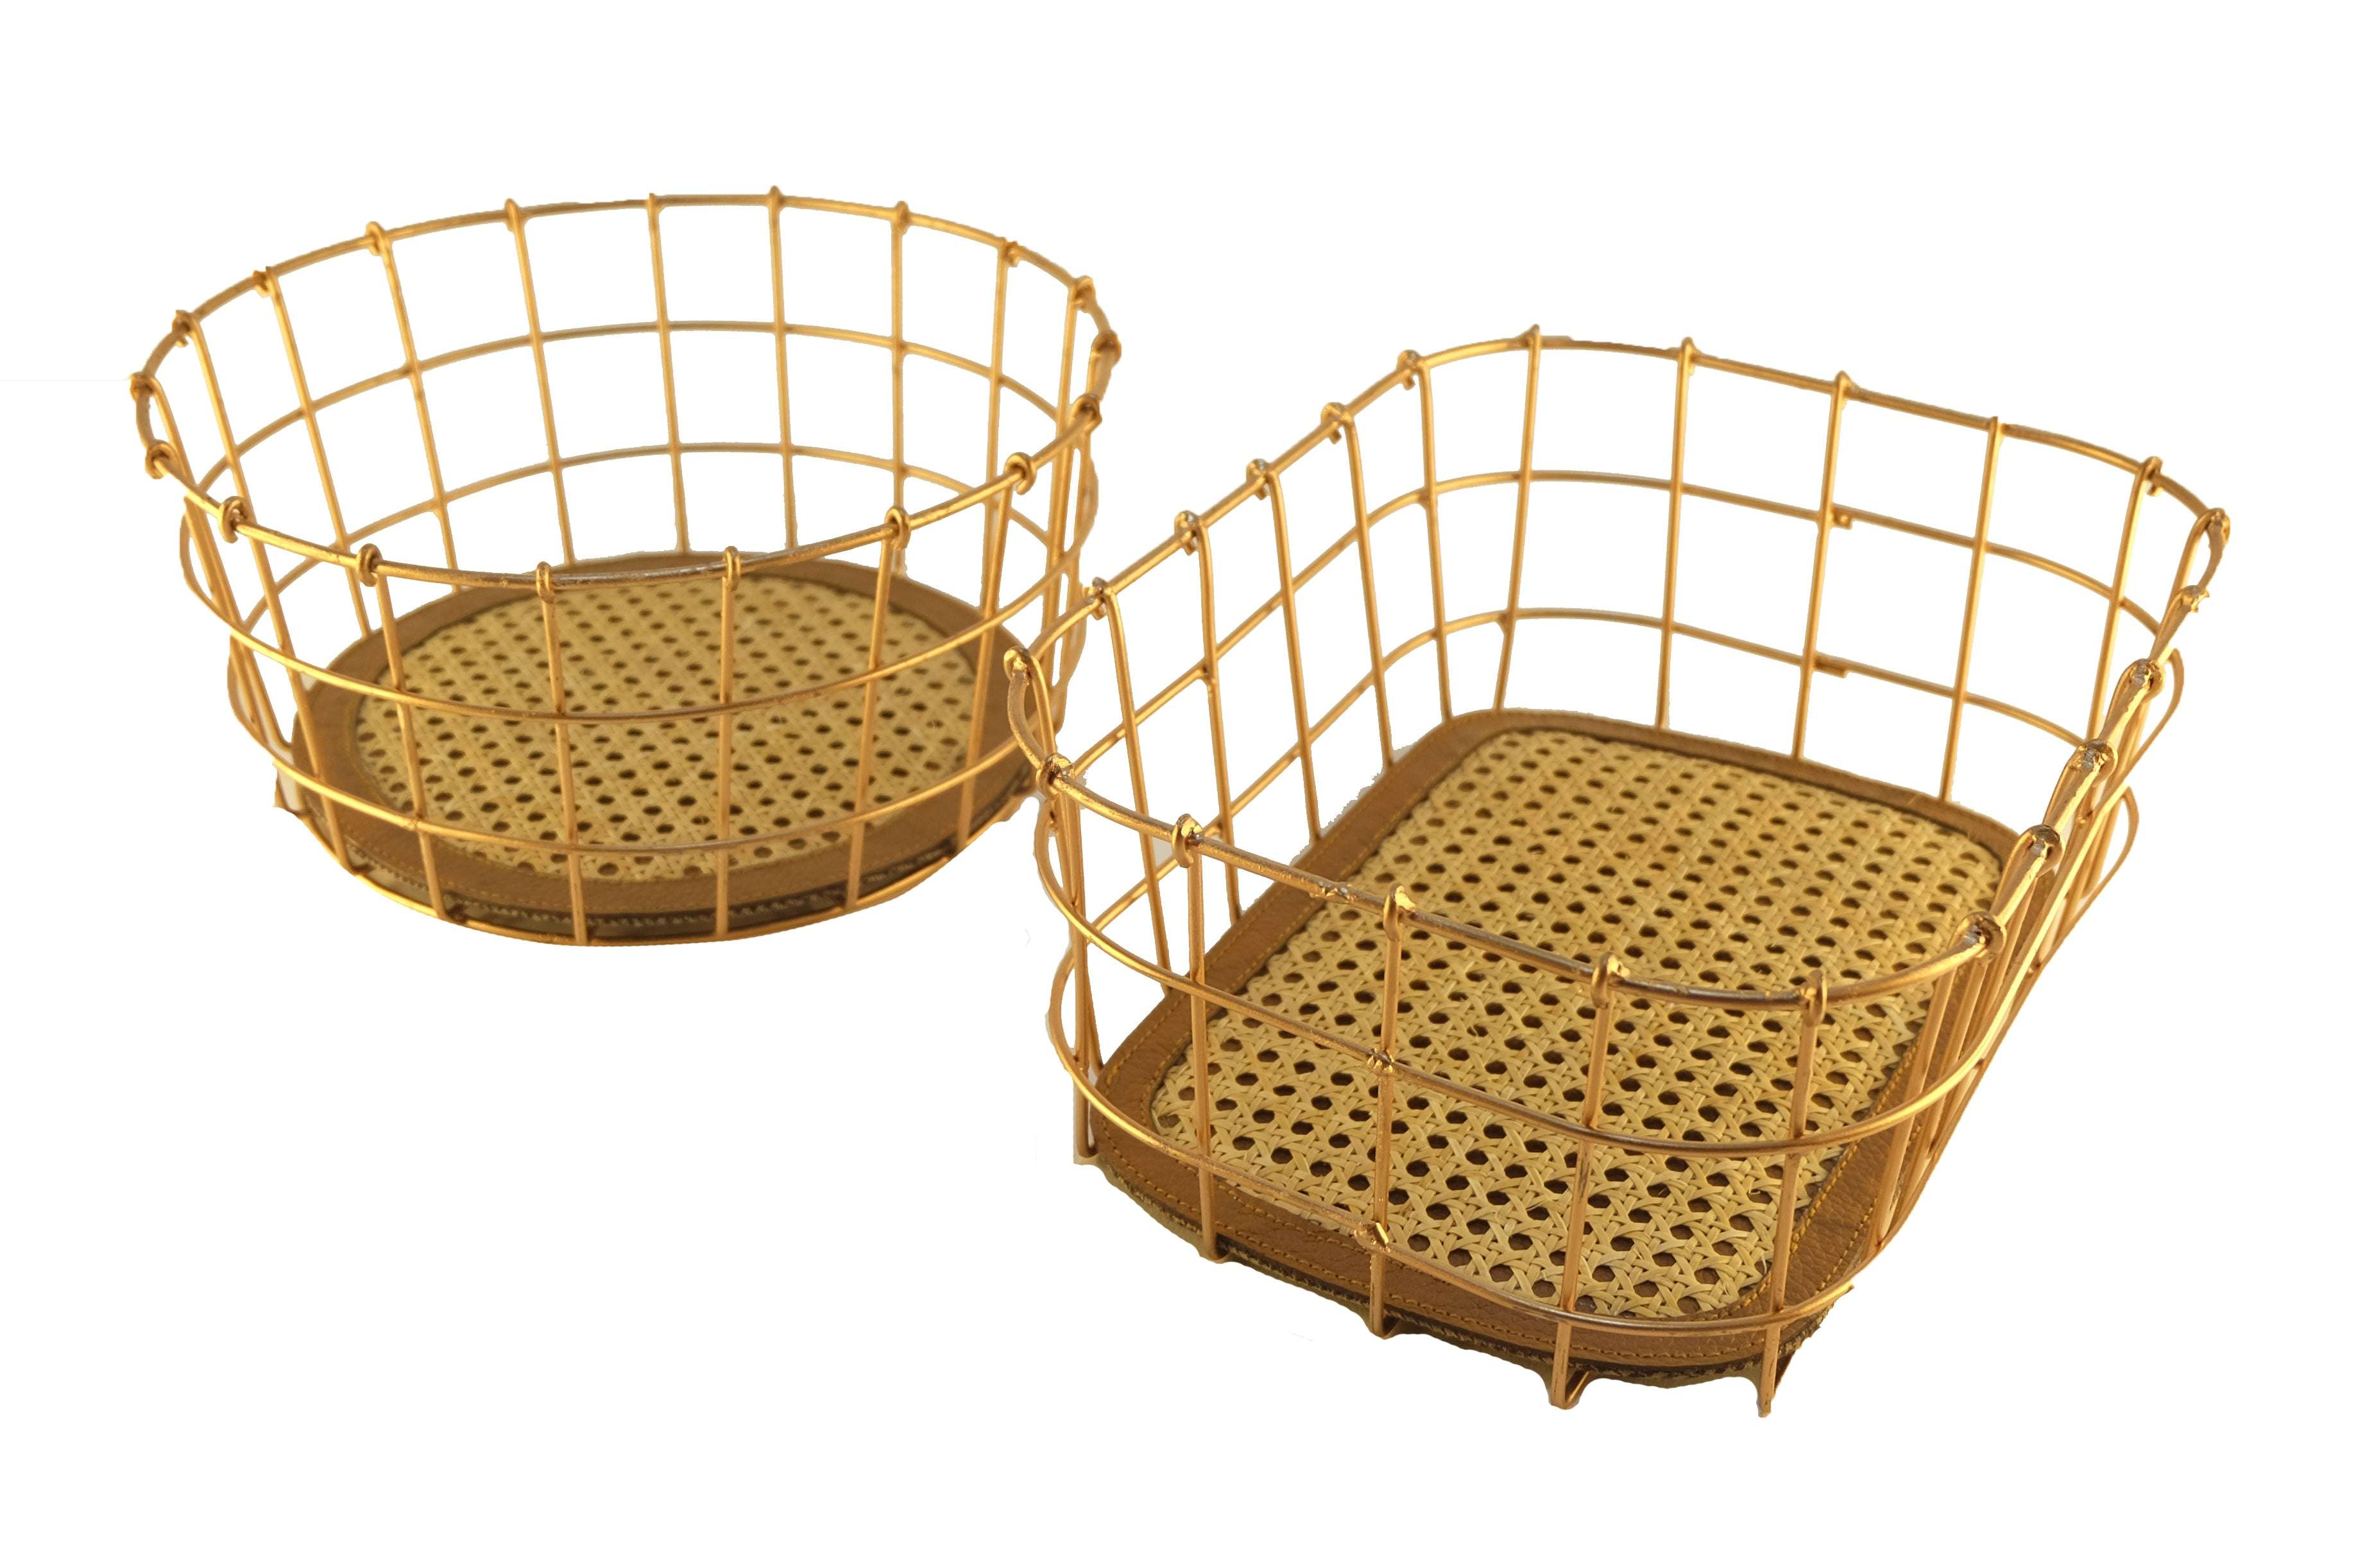 solihiya-baskets-1.jpg